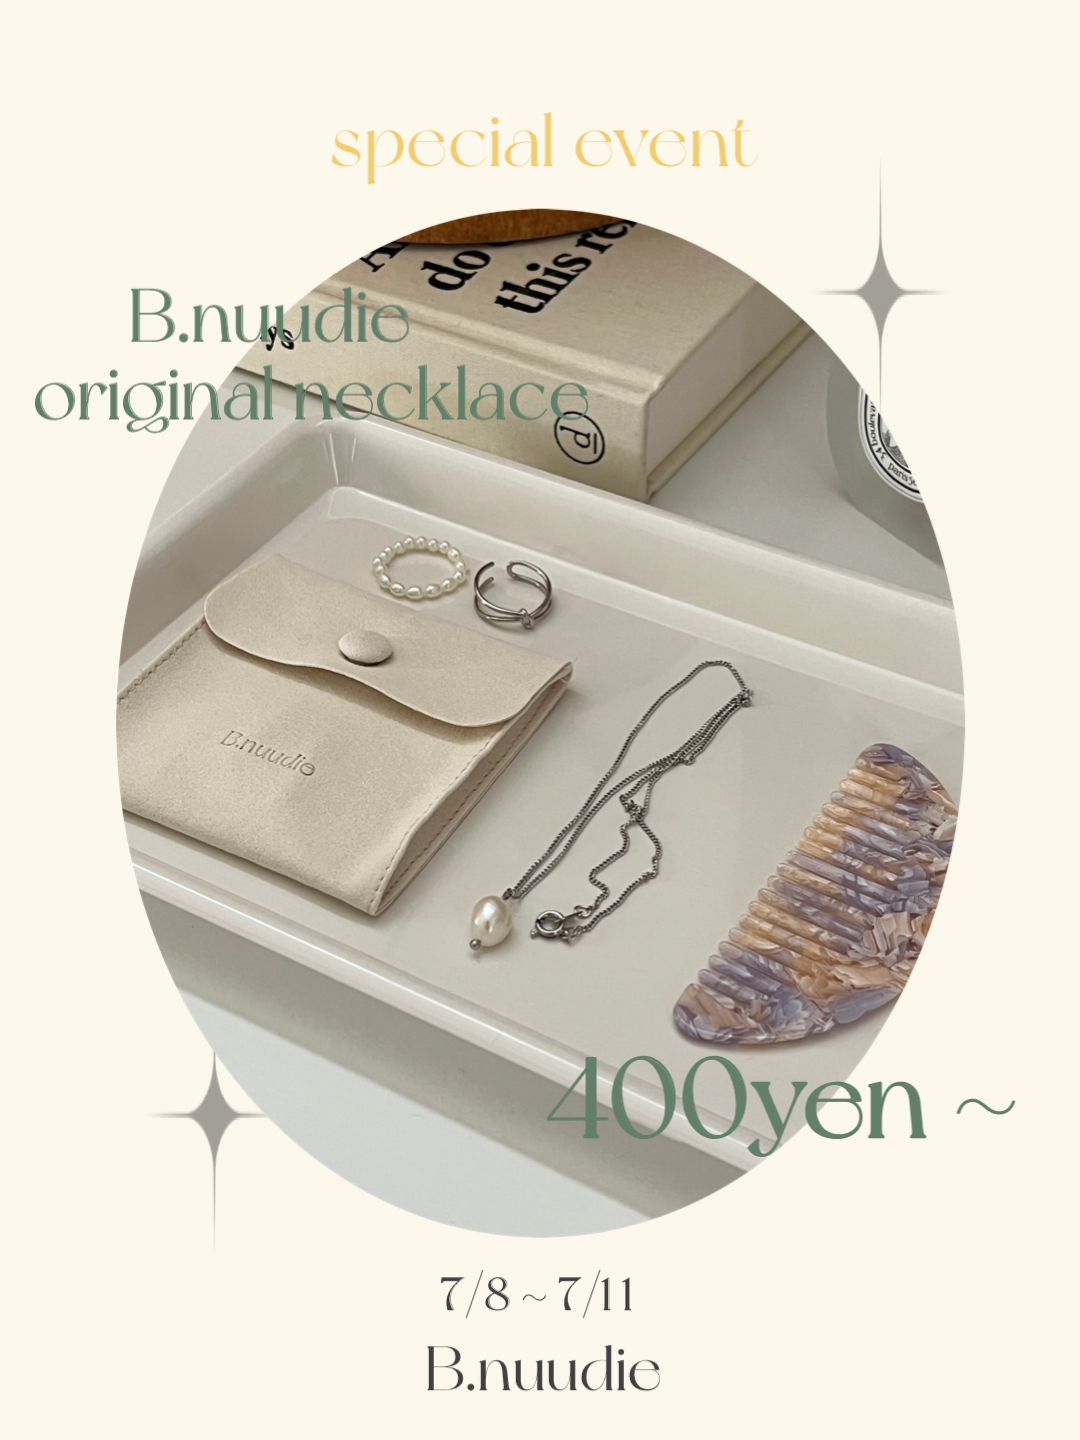 ［Special Event］B.nuudie original necklace "400yen~